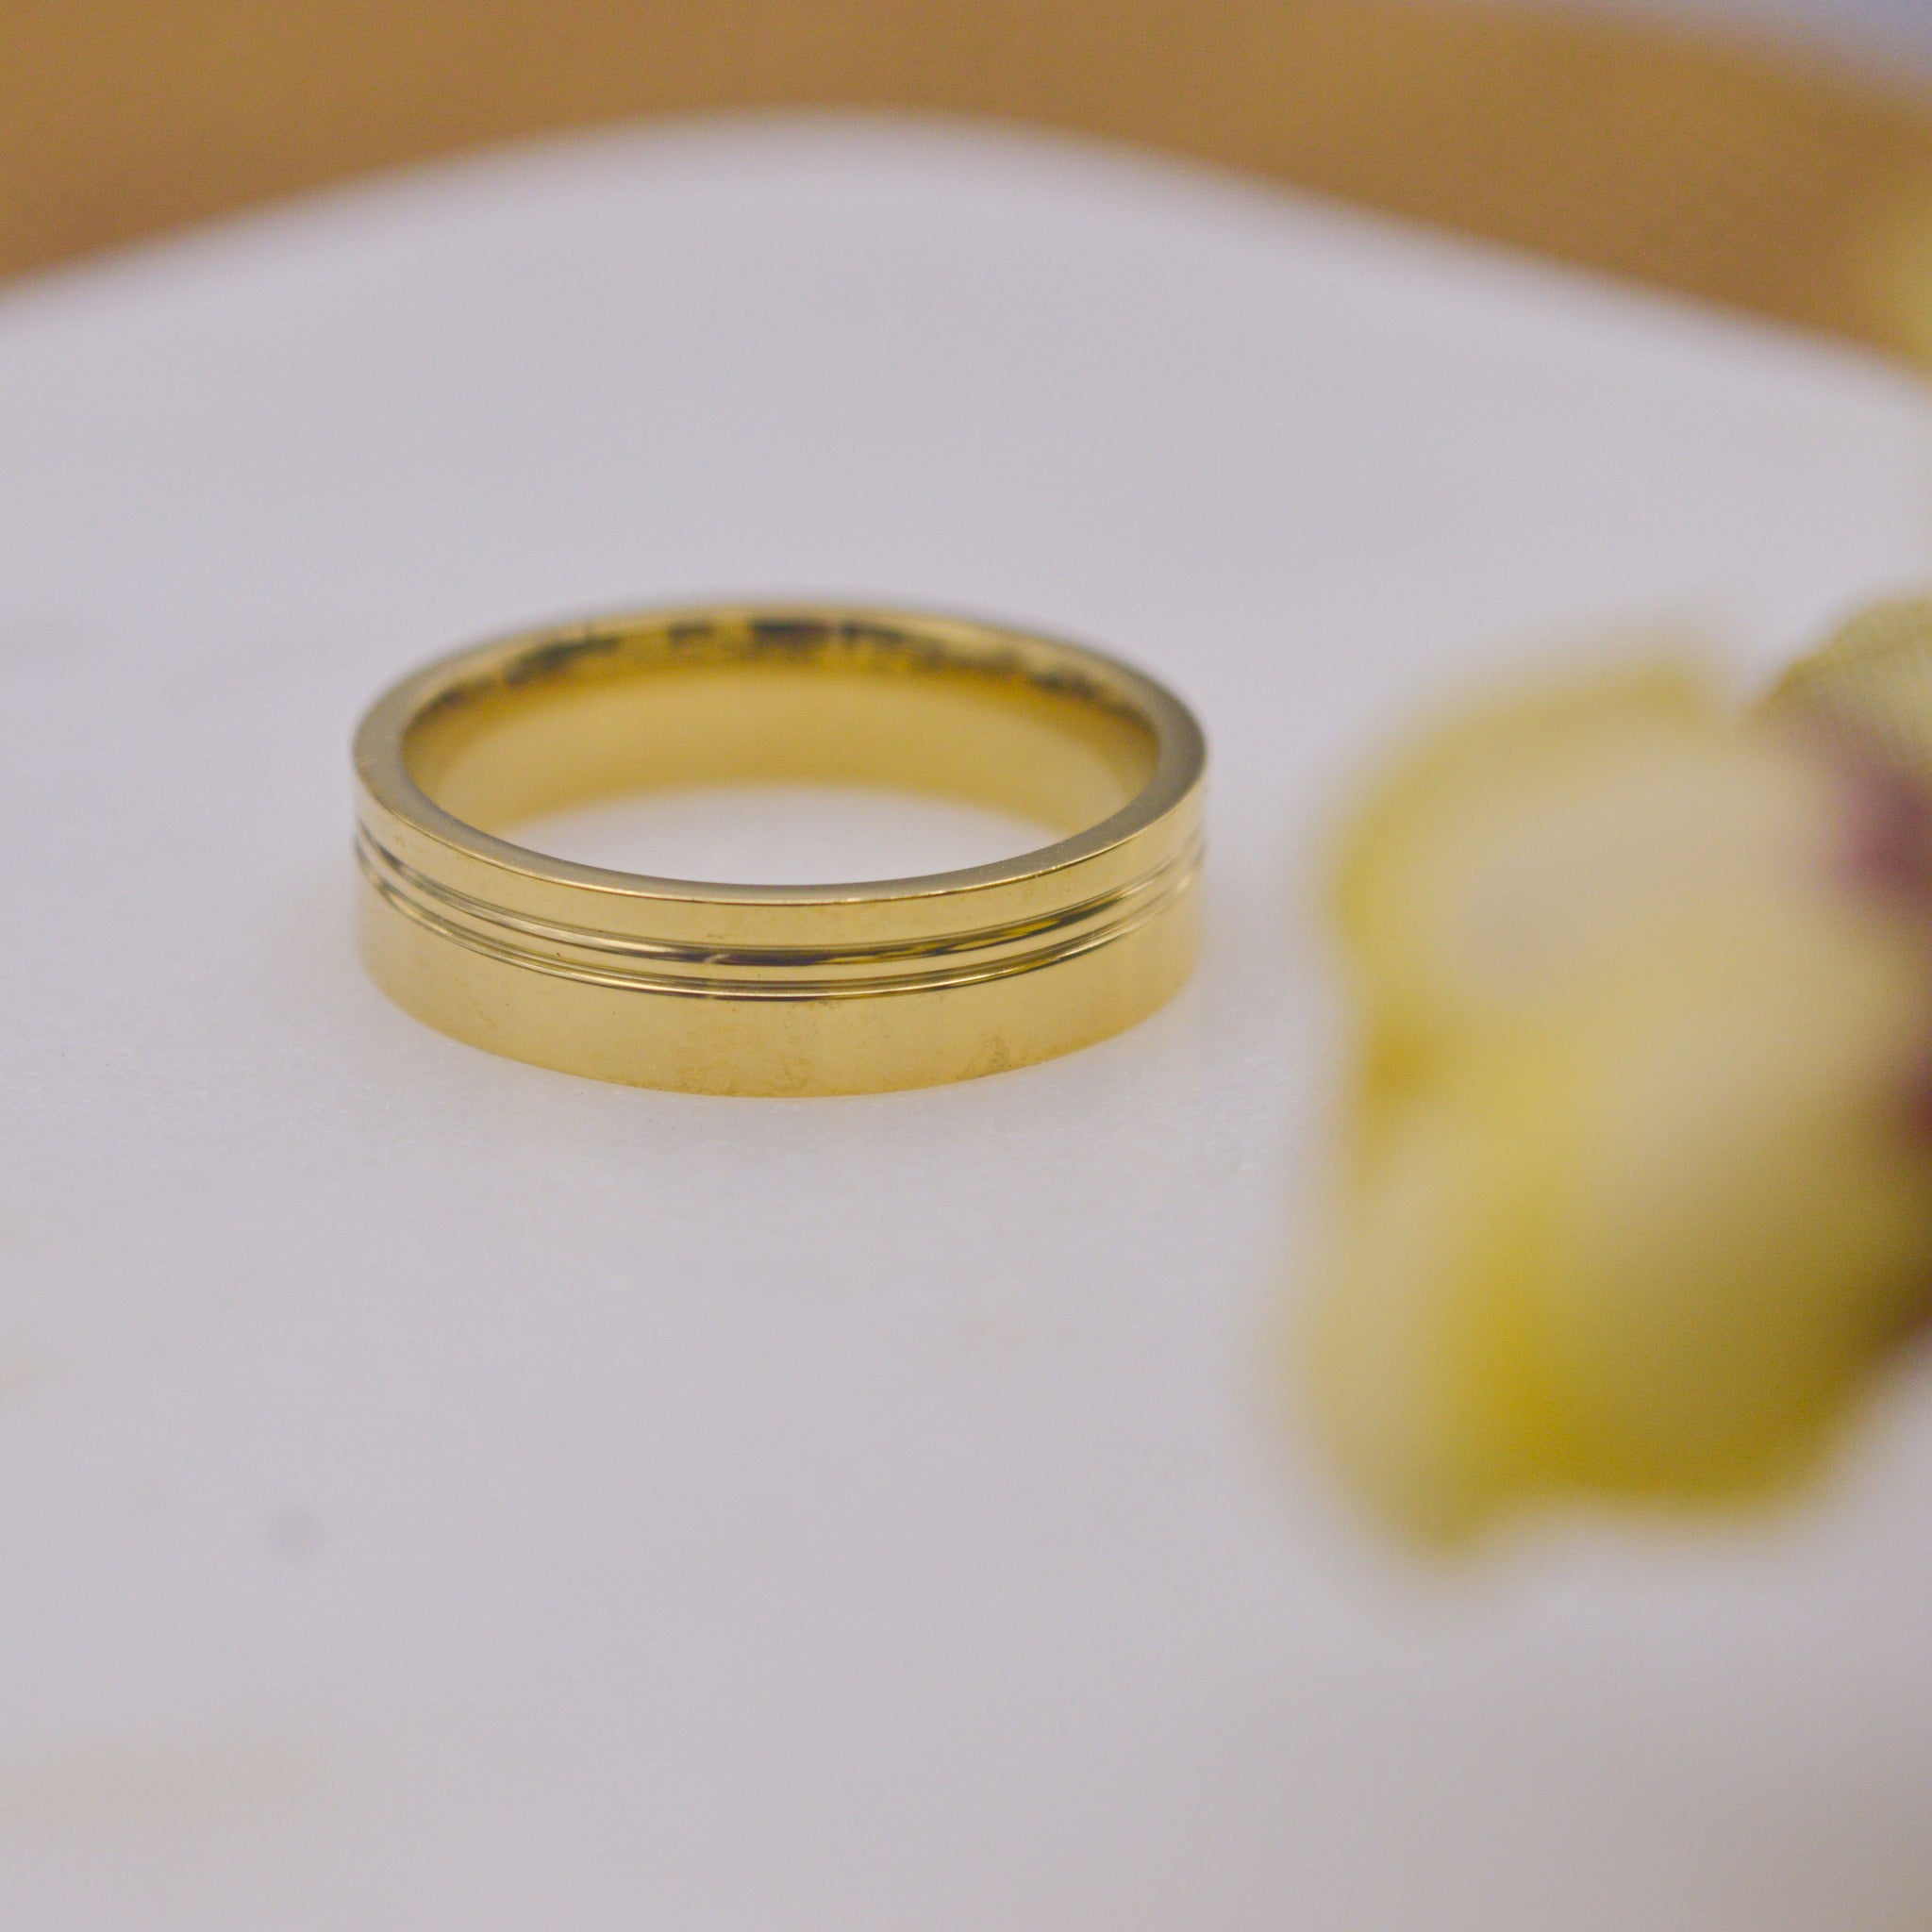 Boyfriend Girlfriend Couple Ring - Custom Couple Rings